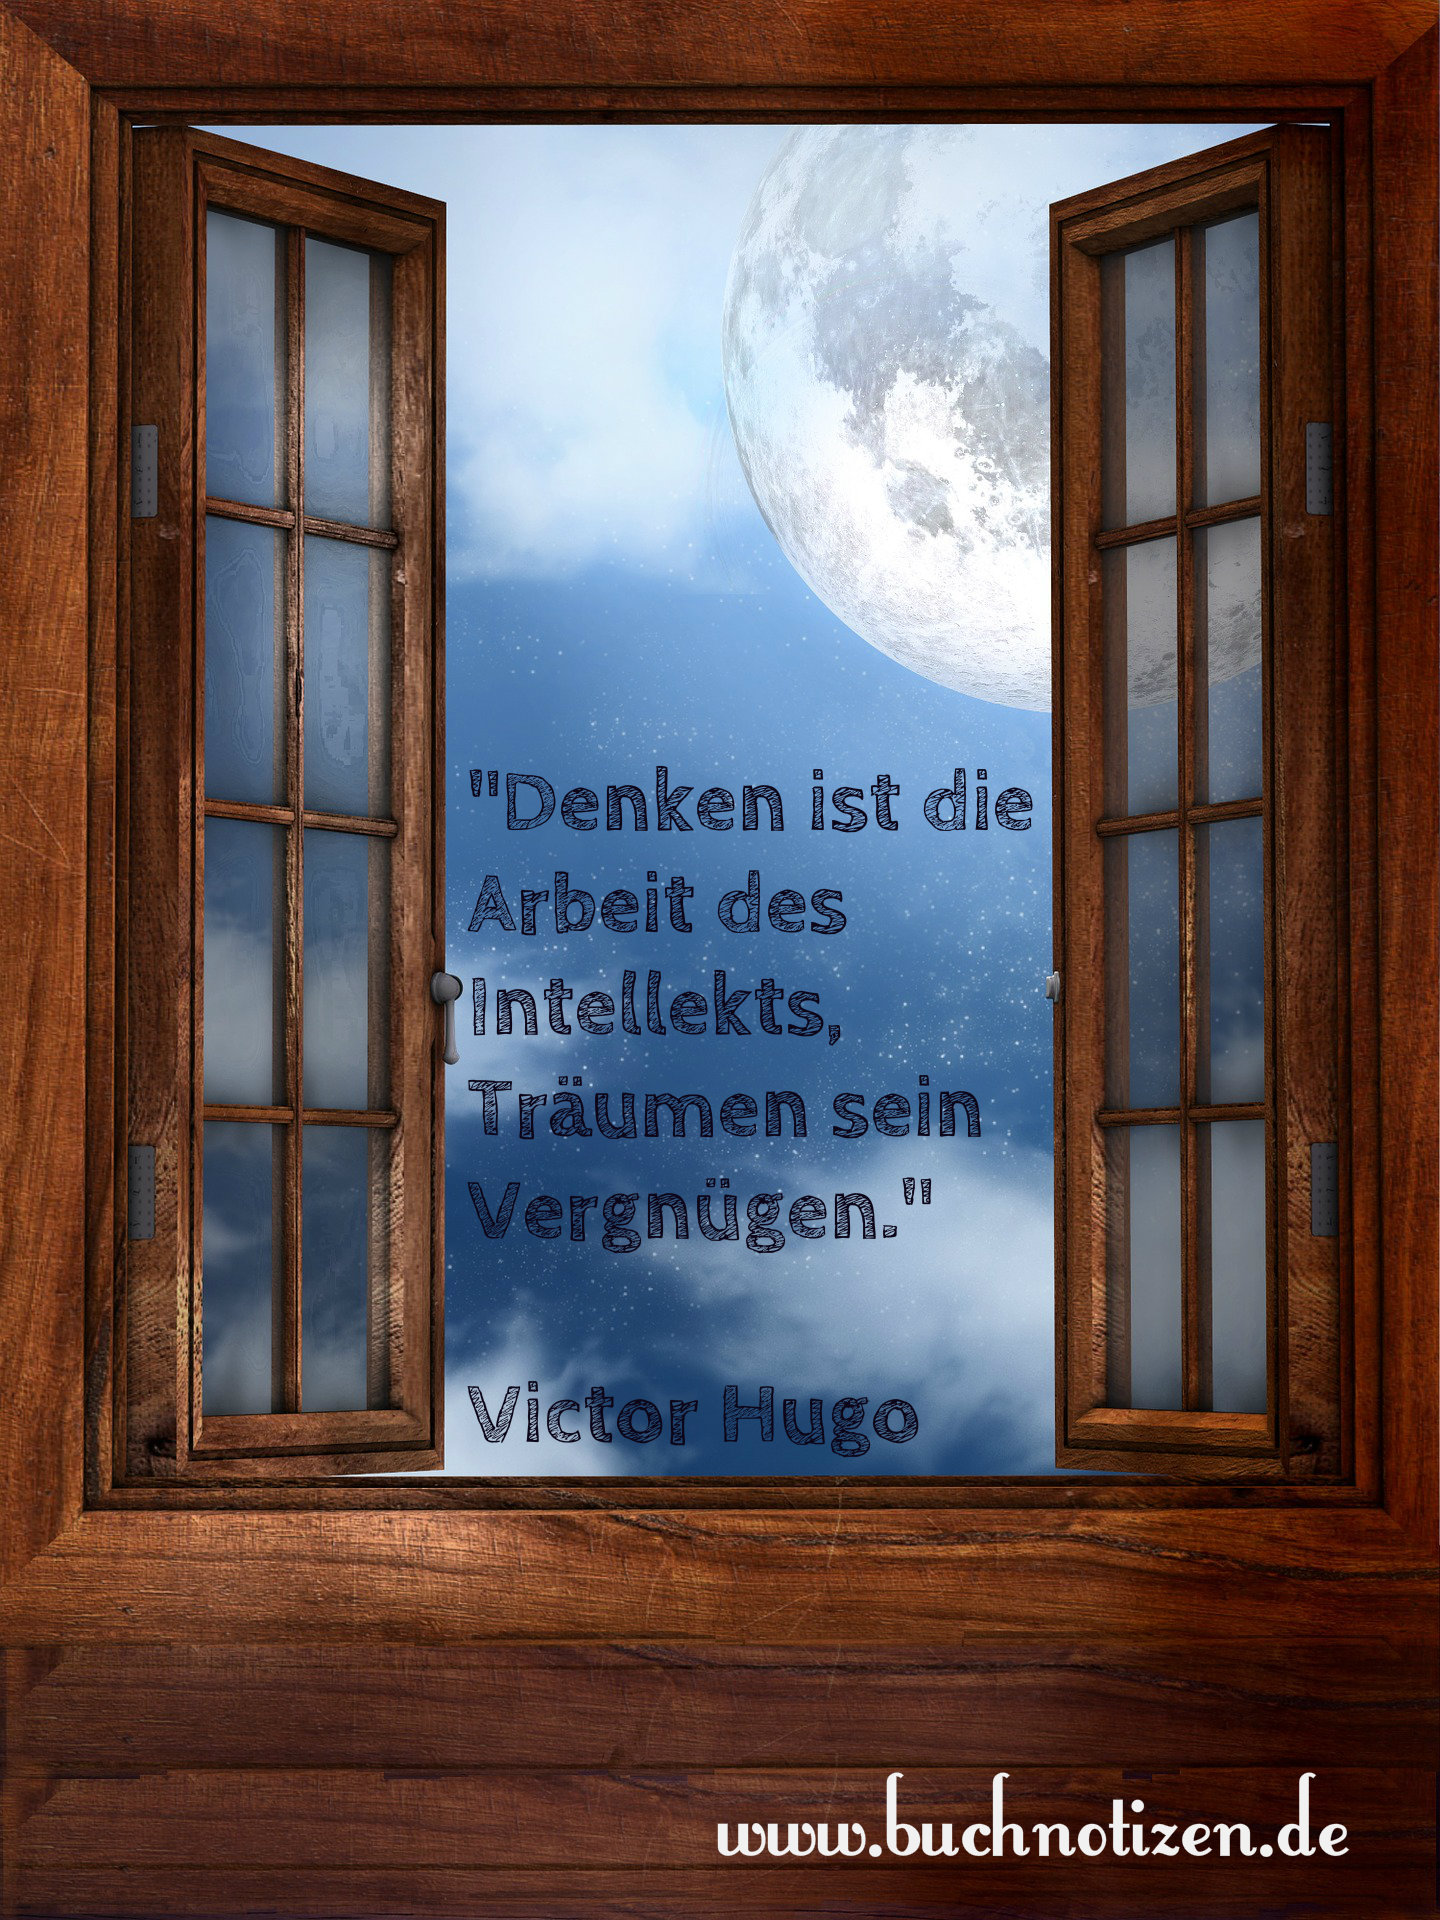 Victor Hugo 30.05.2016